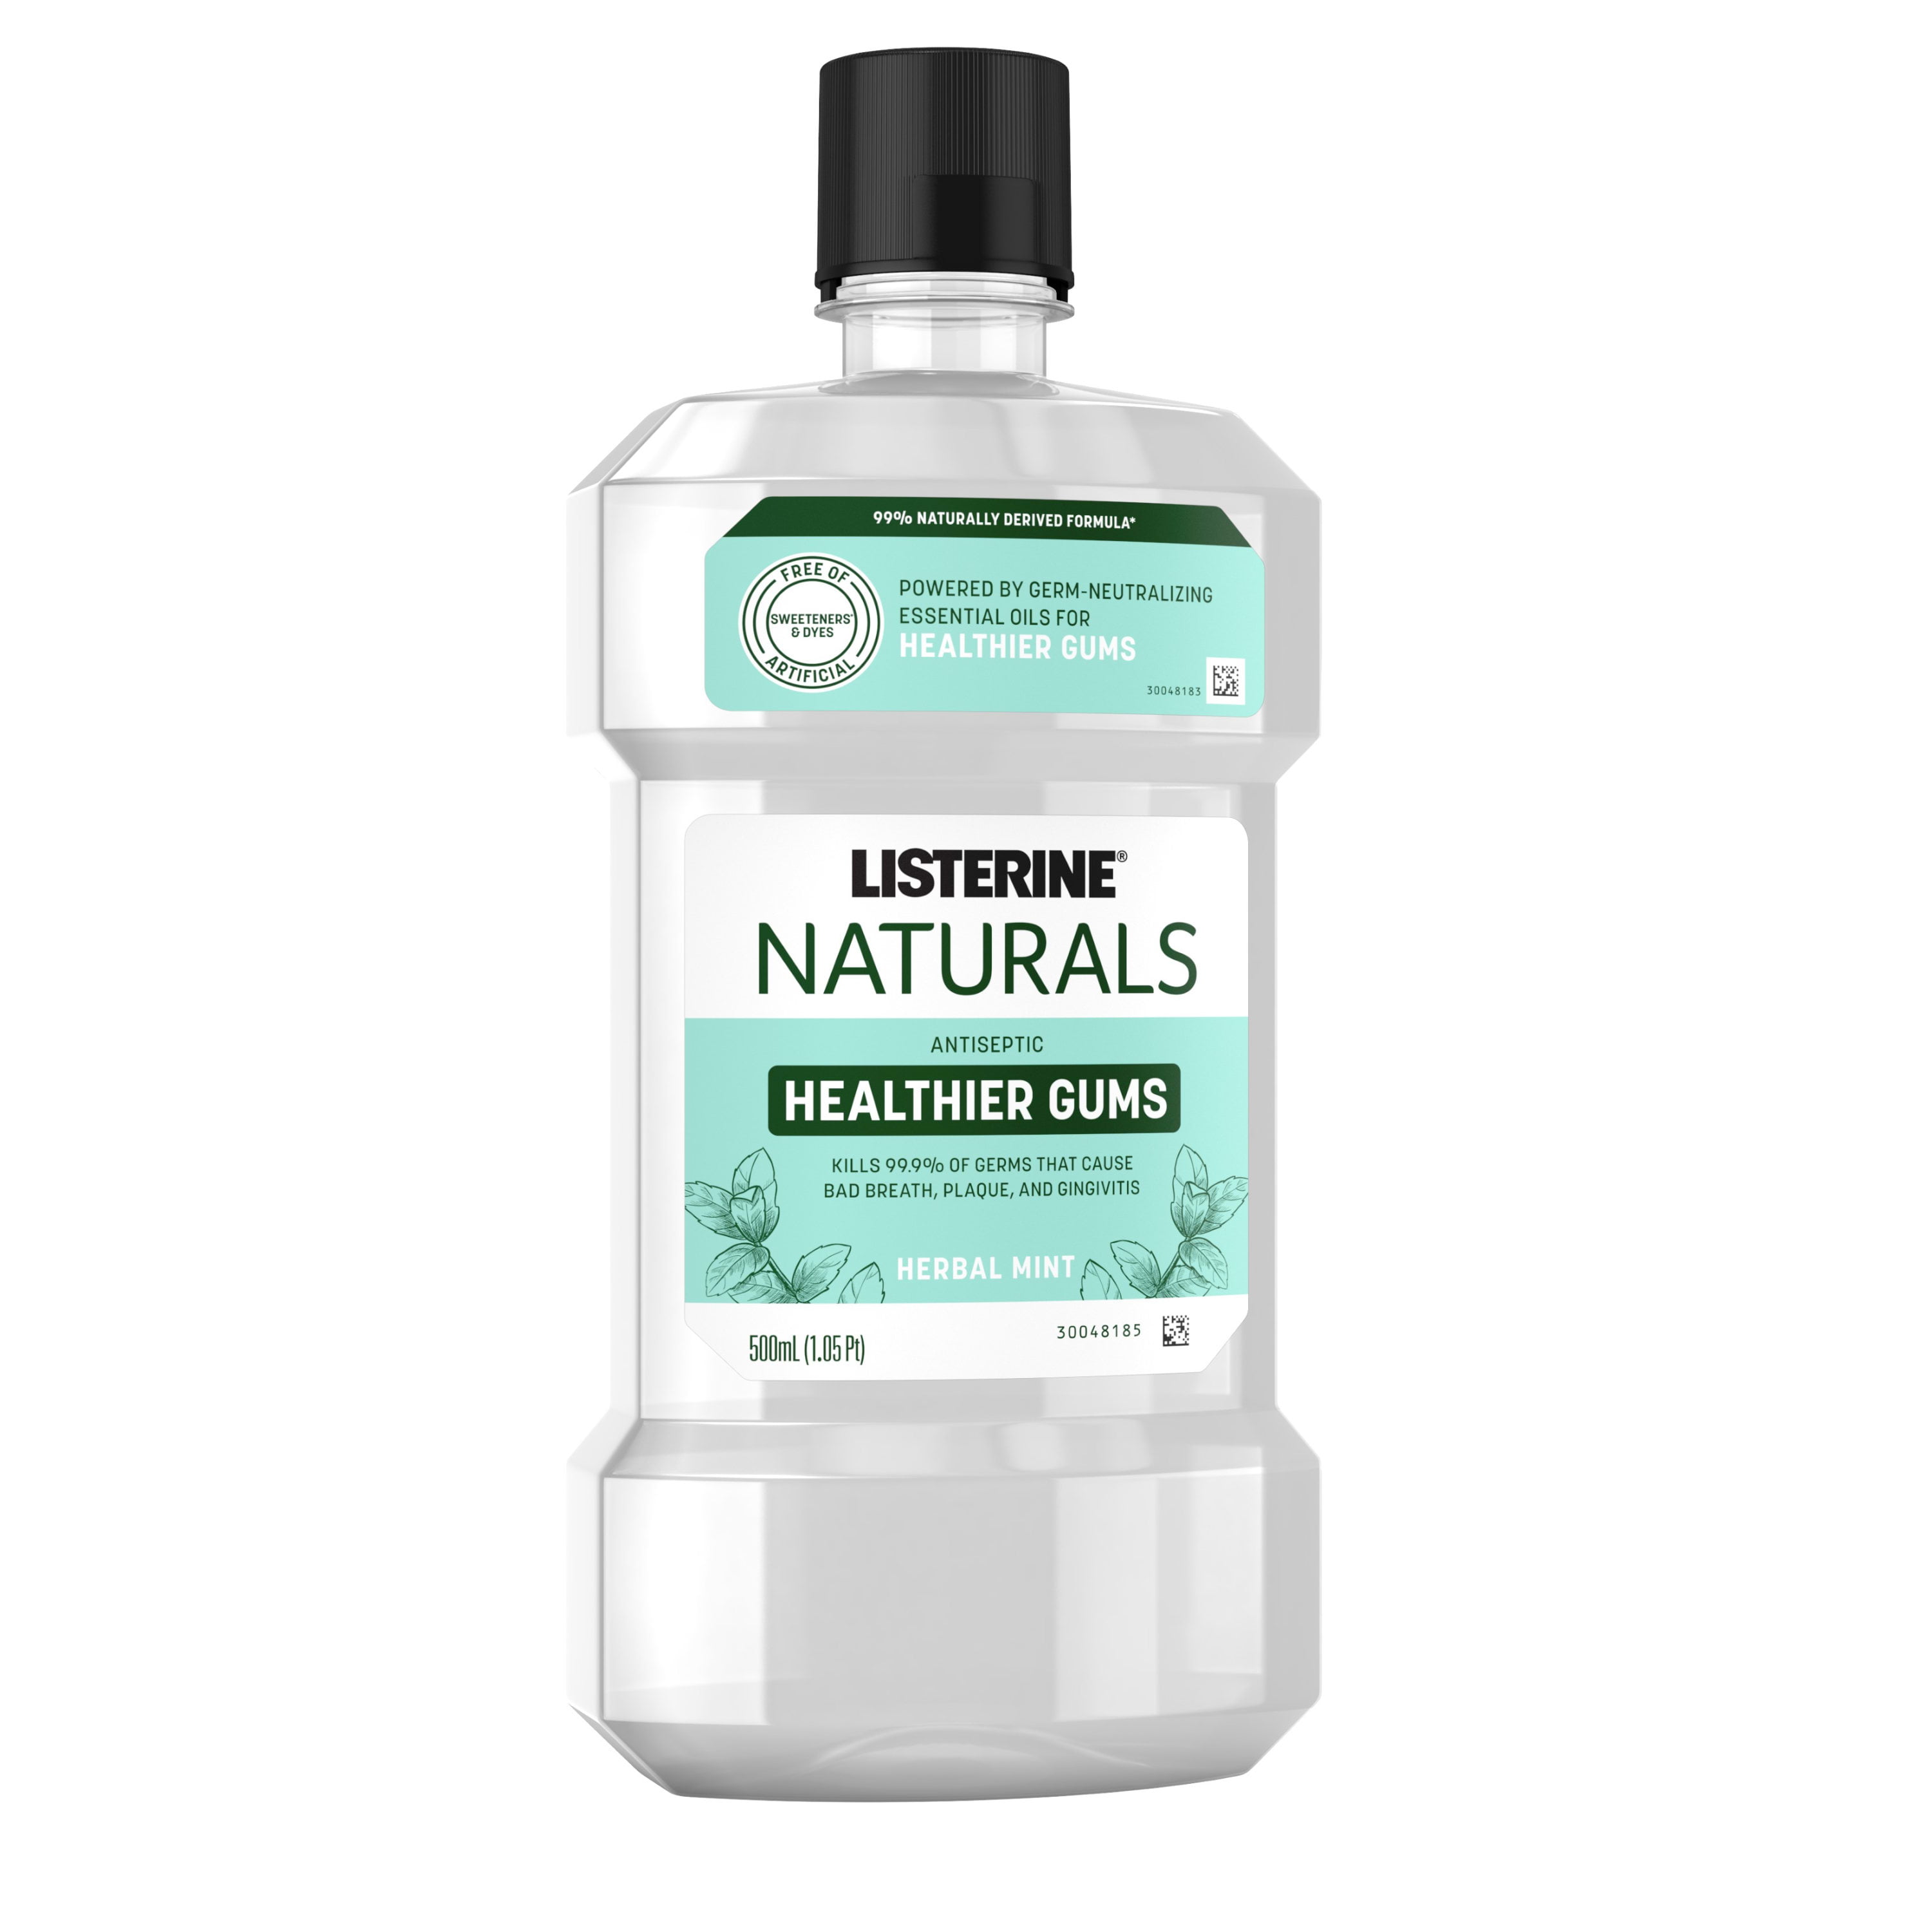 Listerine Naturals Healthier Gums Antiseptic Mouthwash Mint 500 Ml Walmart Com Walmart Com